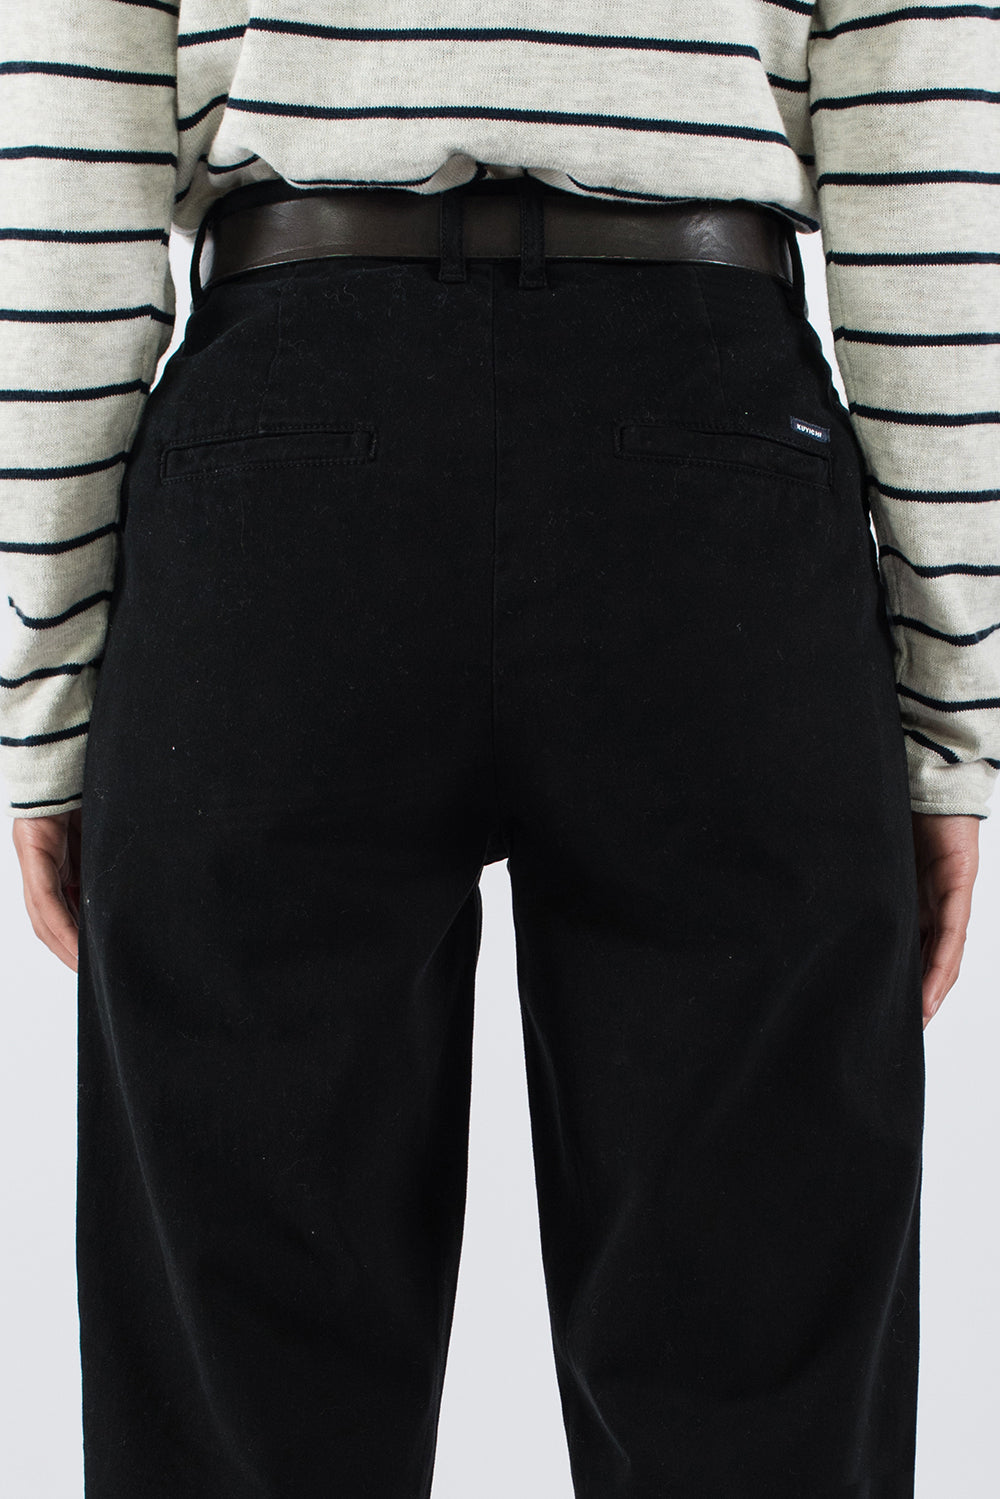 Pantalone 100% Cotone Biologico GOTS - Lara black - Caminaròli Ethical Fashion